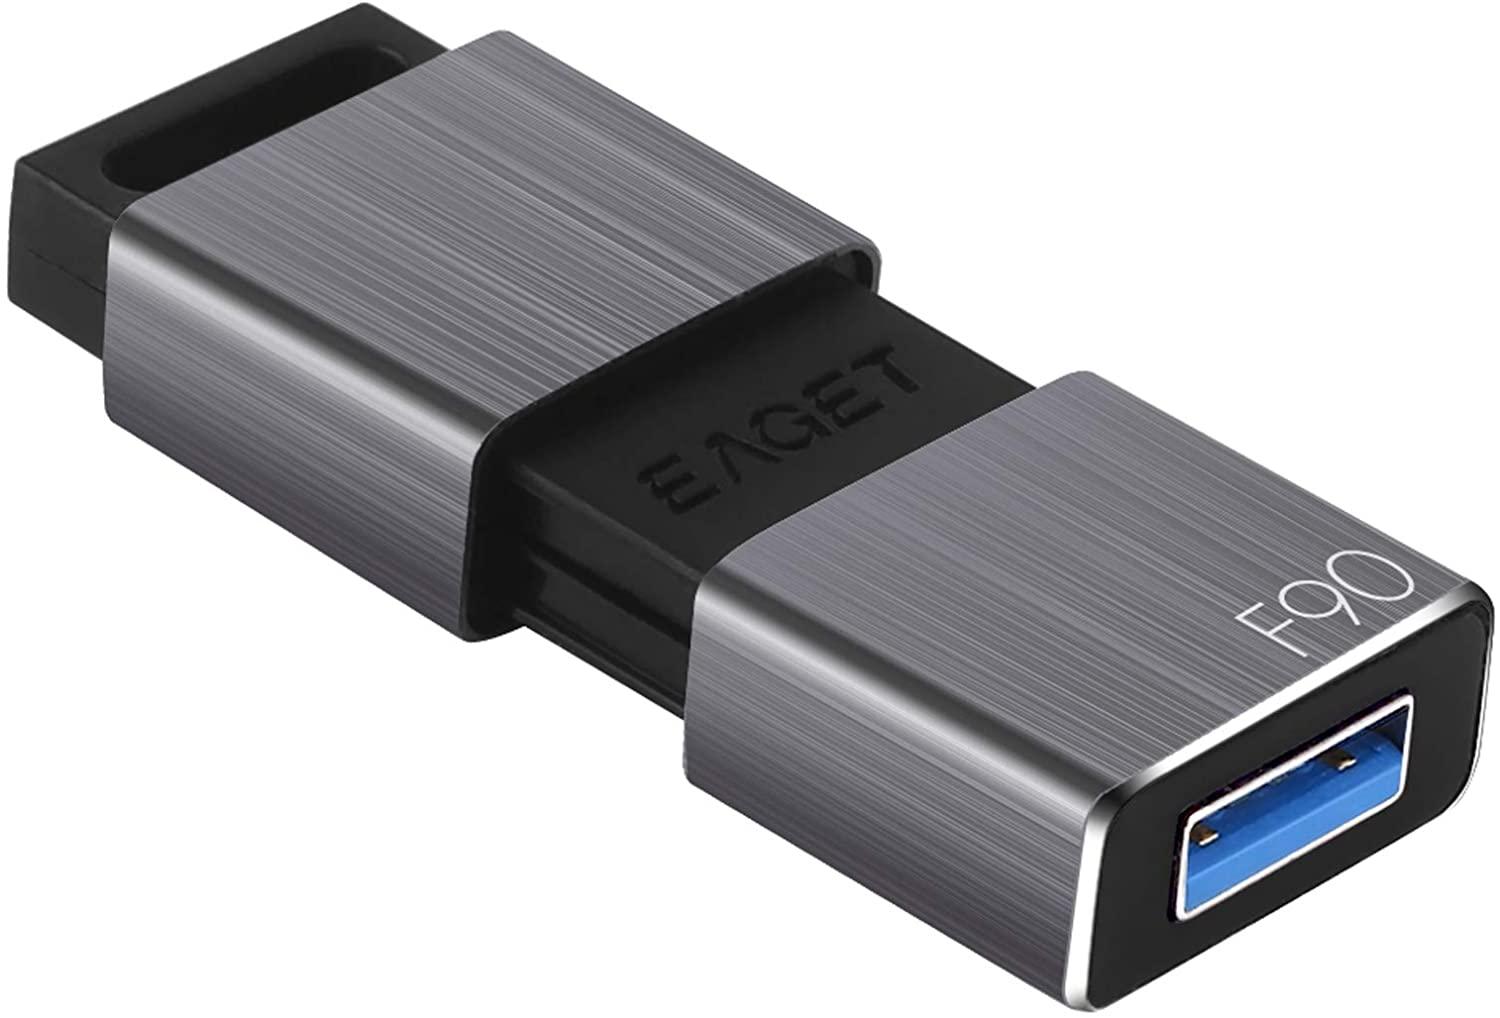 Techkey F90 128GB USB 3.0 Flash Drive for $10.99